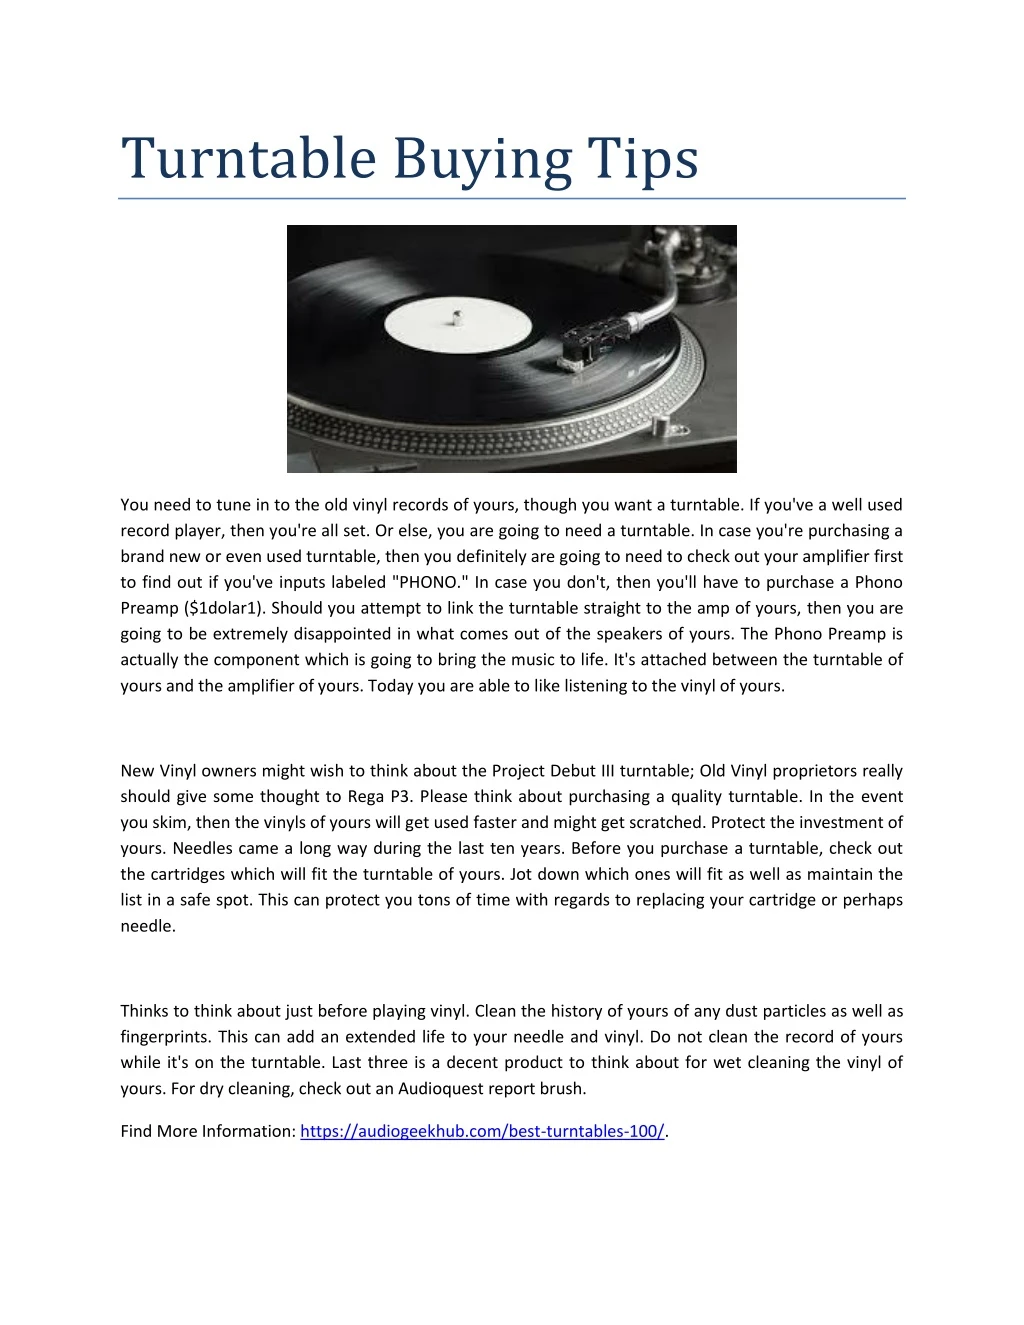 turntable buying tips